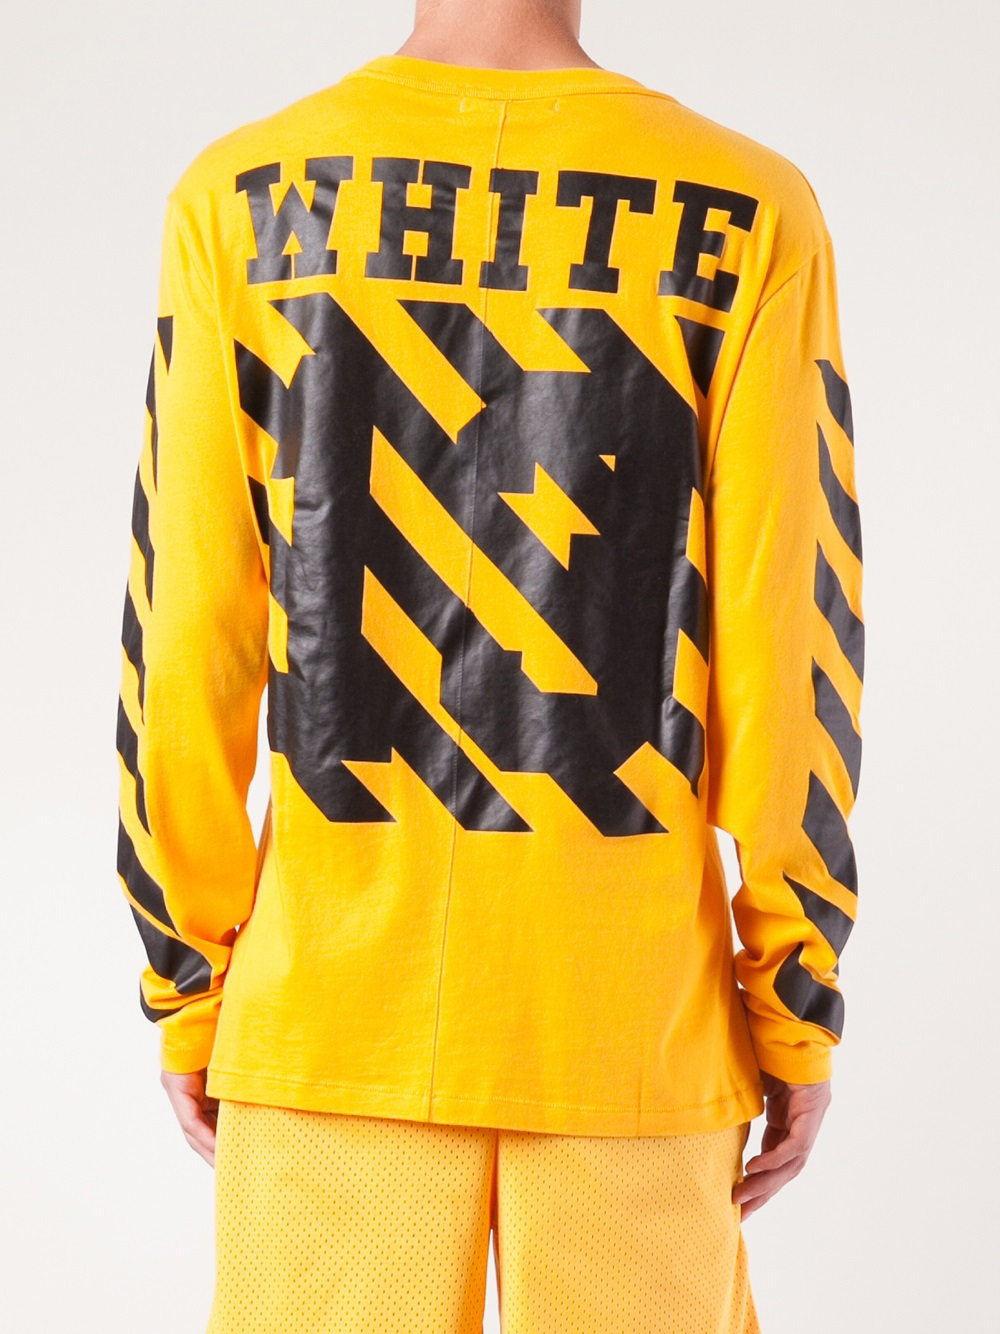 Off-White c/o Virgil Abloh Long Sleeve T-Shirt in Yellow & Orange (Yellow)  for Men - Lyst